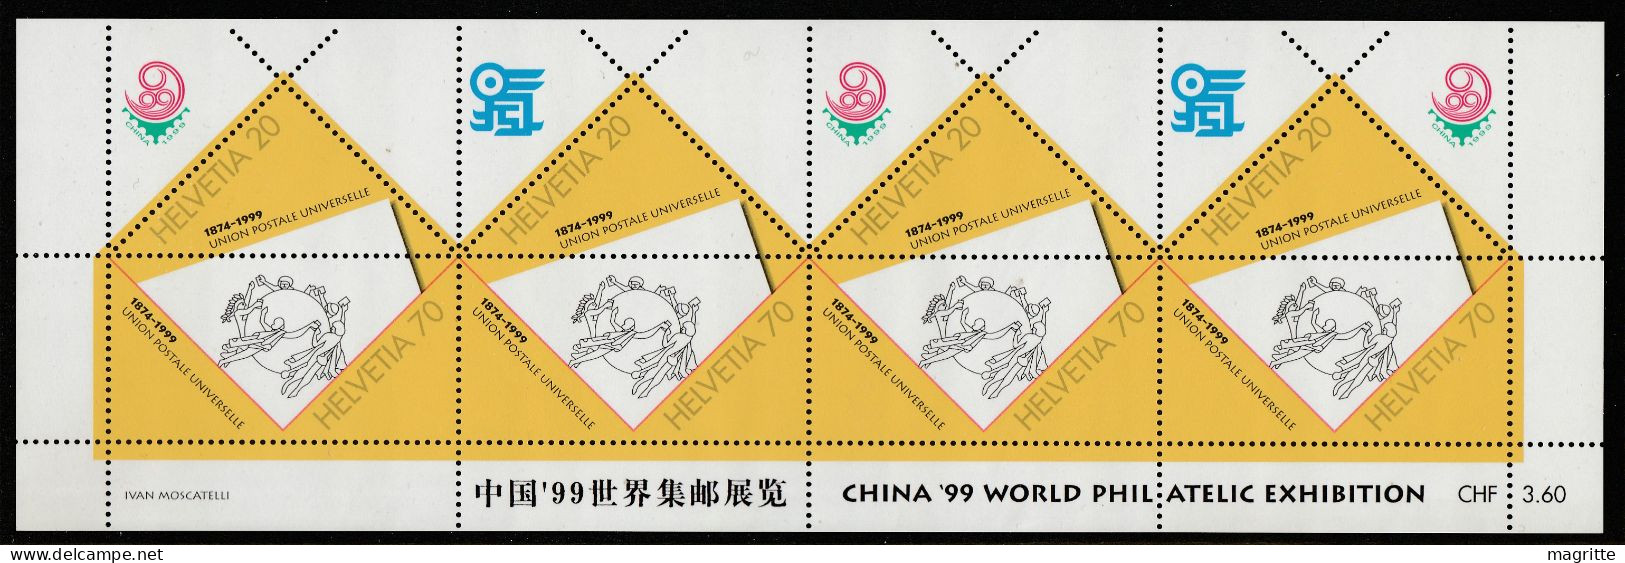 Suisse 1999 Feuillet Neuf ** China '99 Switzerland Sheetlet World Philatelix Exhibition Mint MNH - Blocs & Feuillets